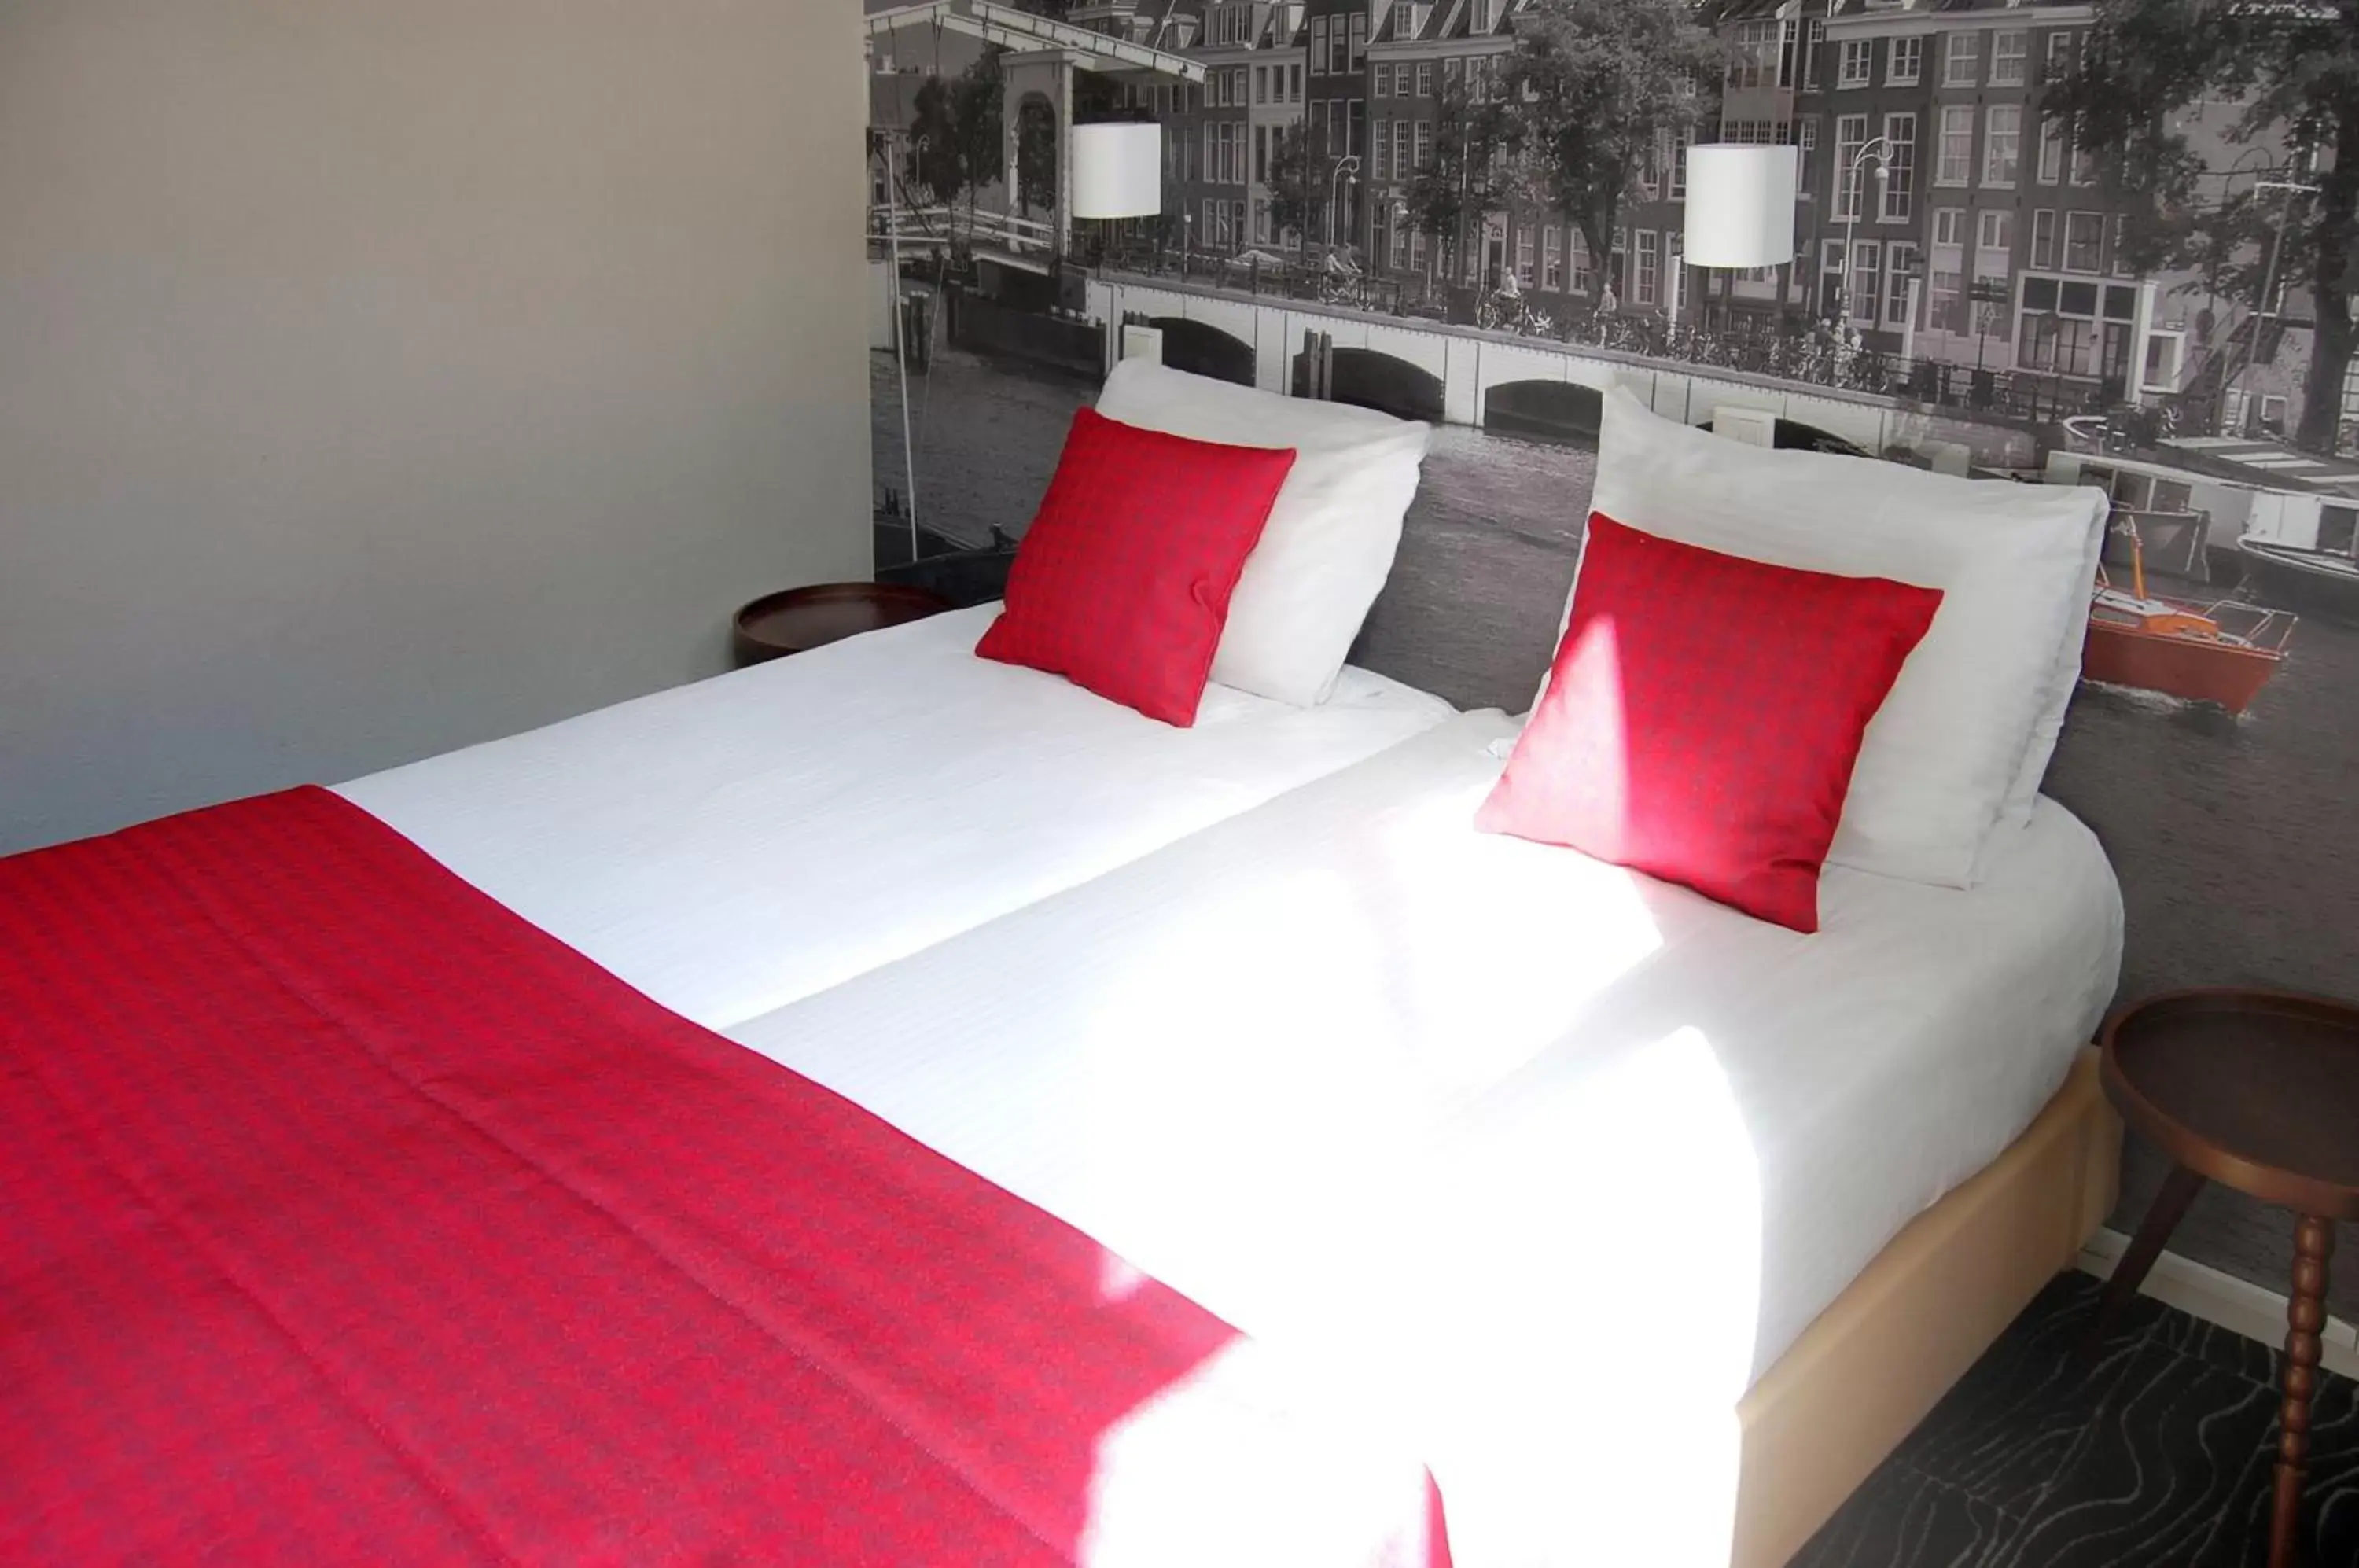 Bed, Room Photo in Prinsenhotel